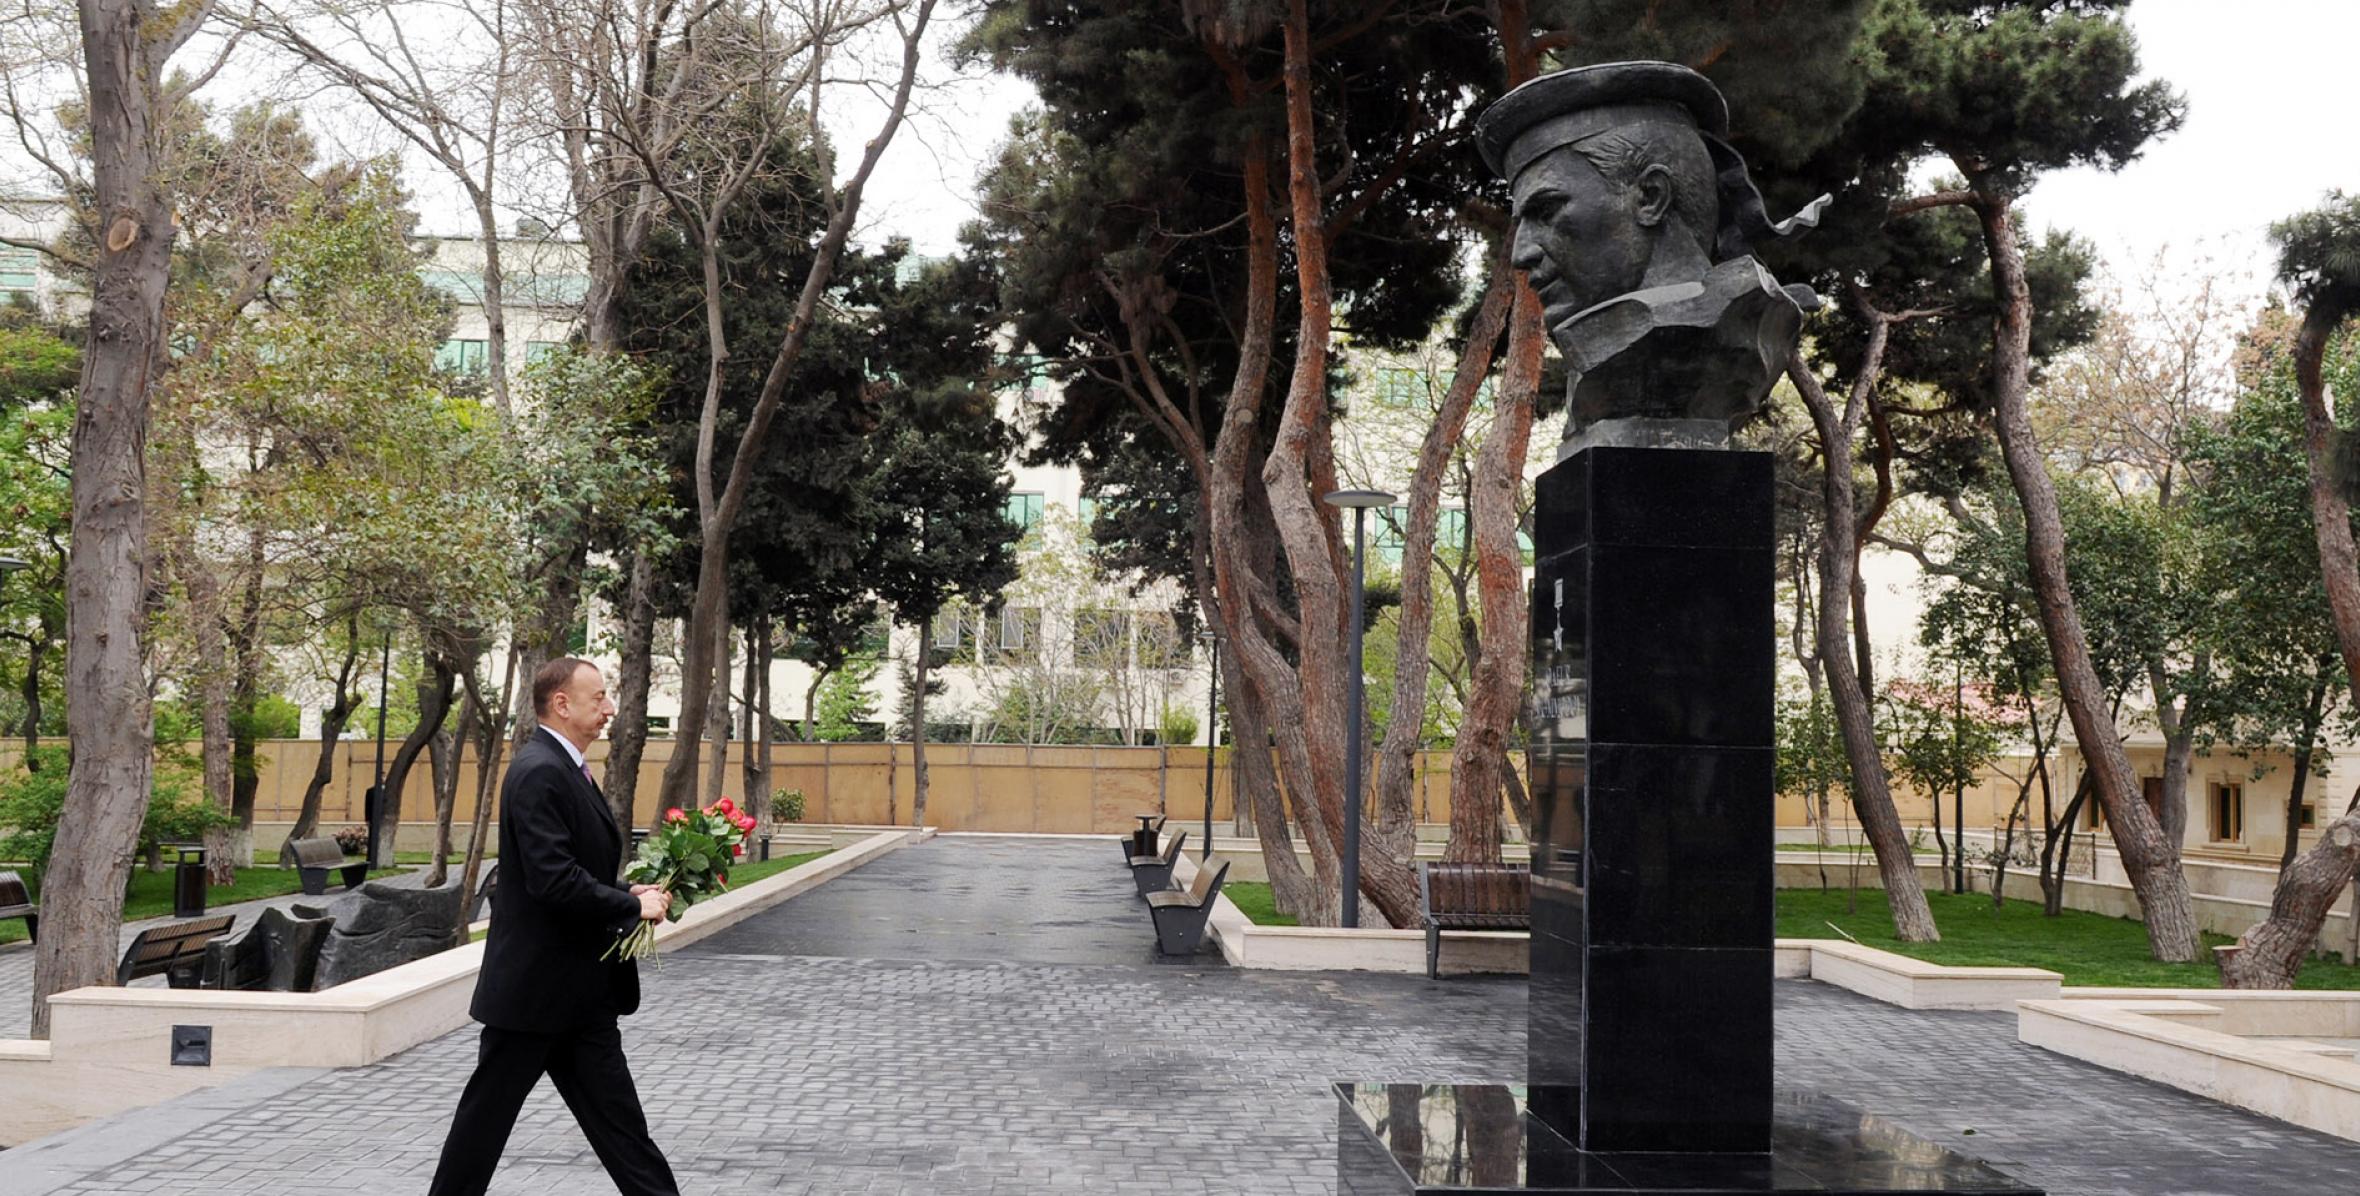 Ilham Aliyev visited the park, named after Soviet Hero Gafur Mammadov